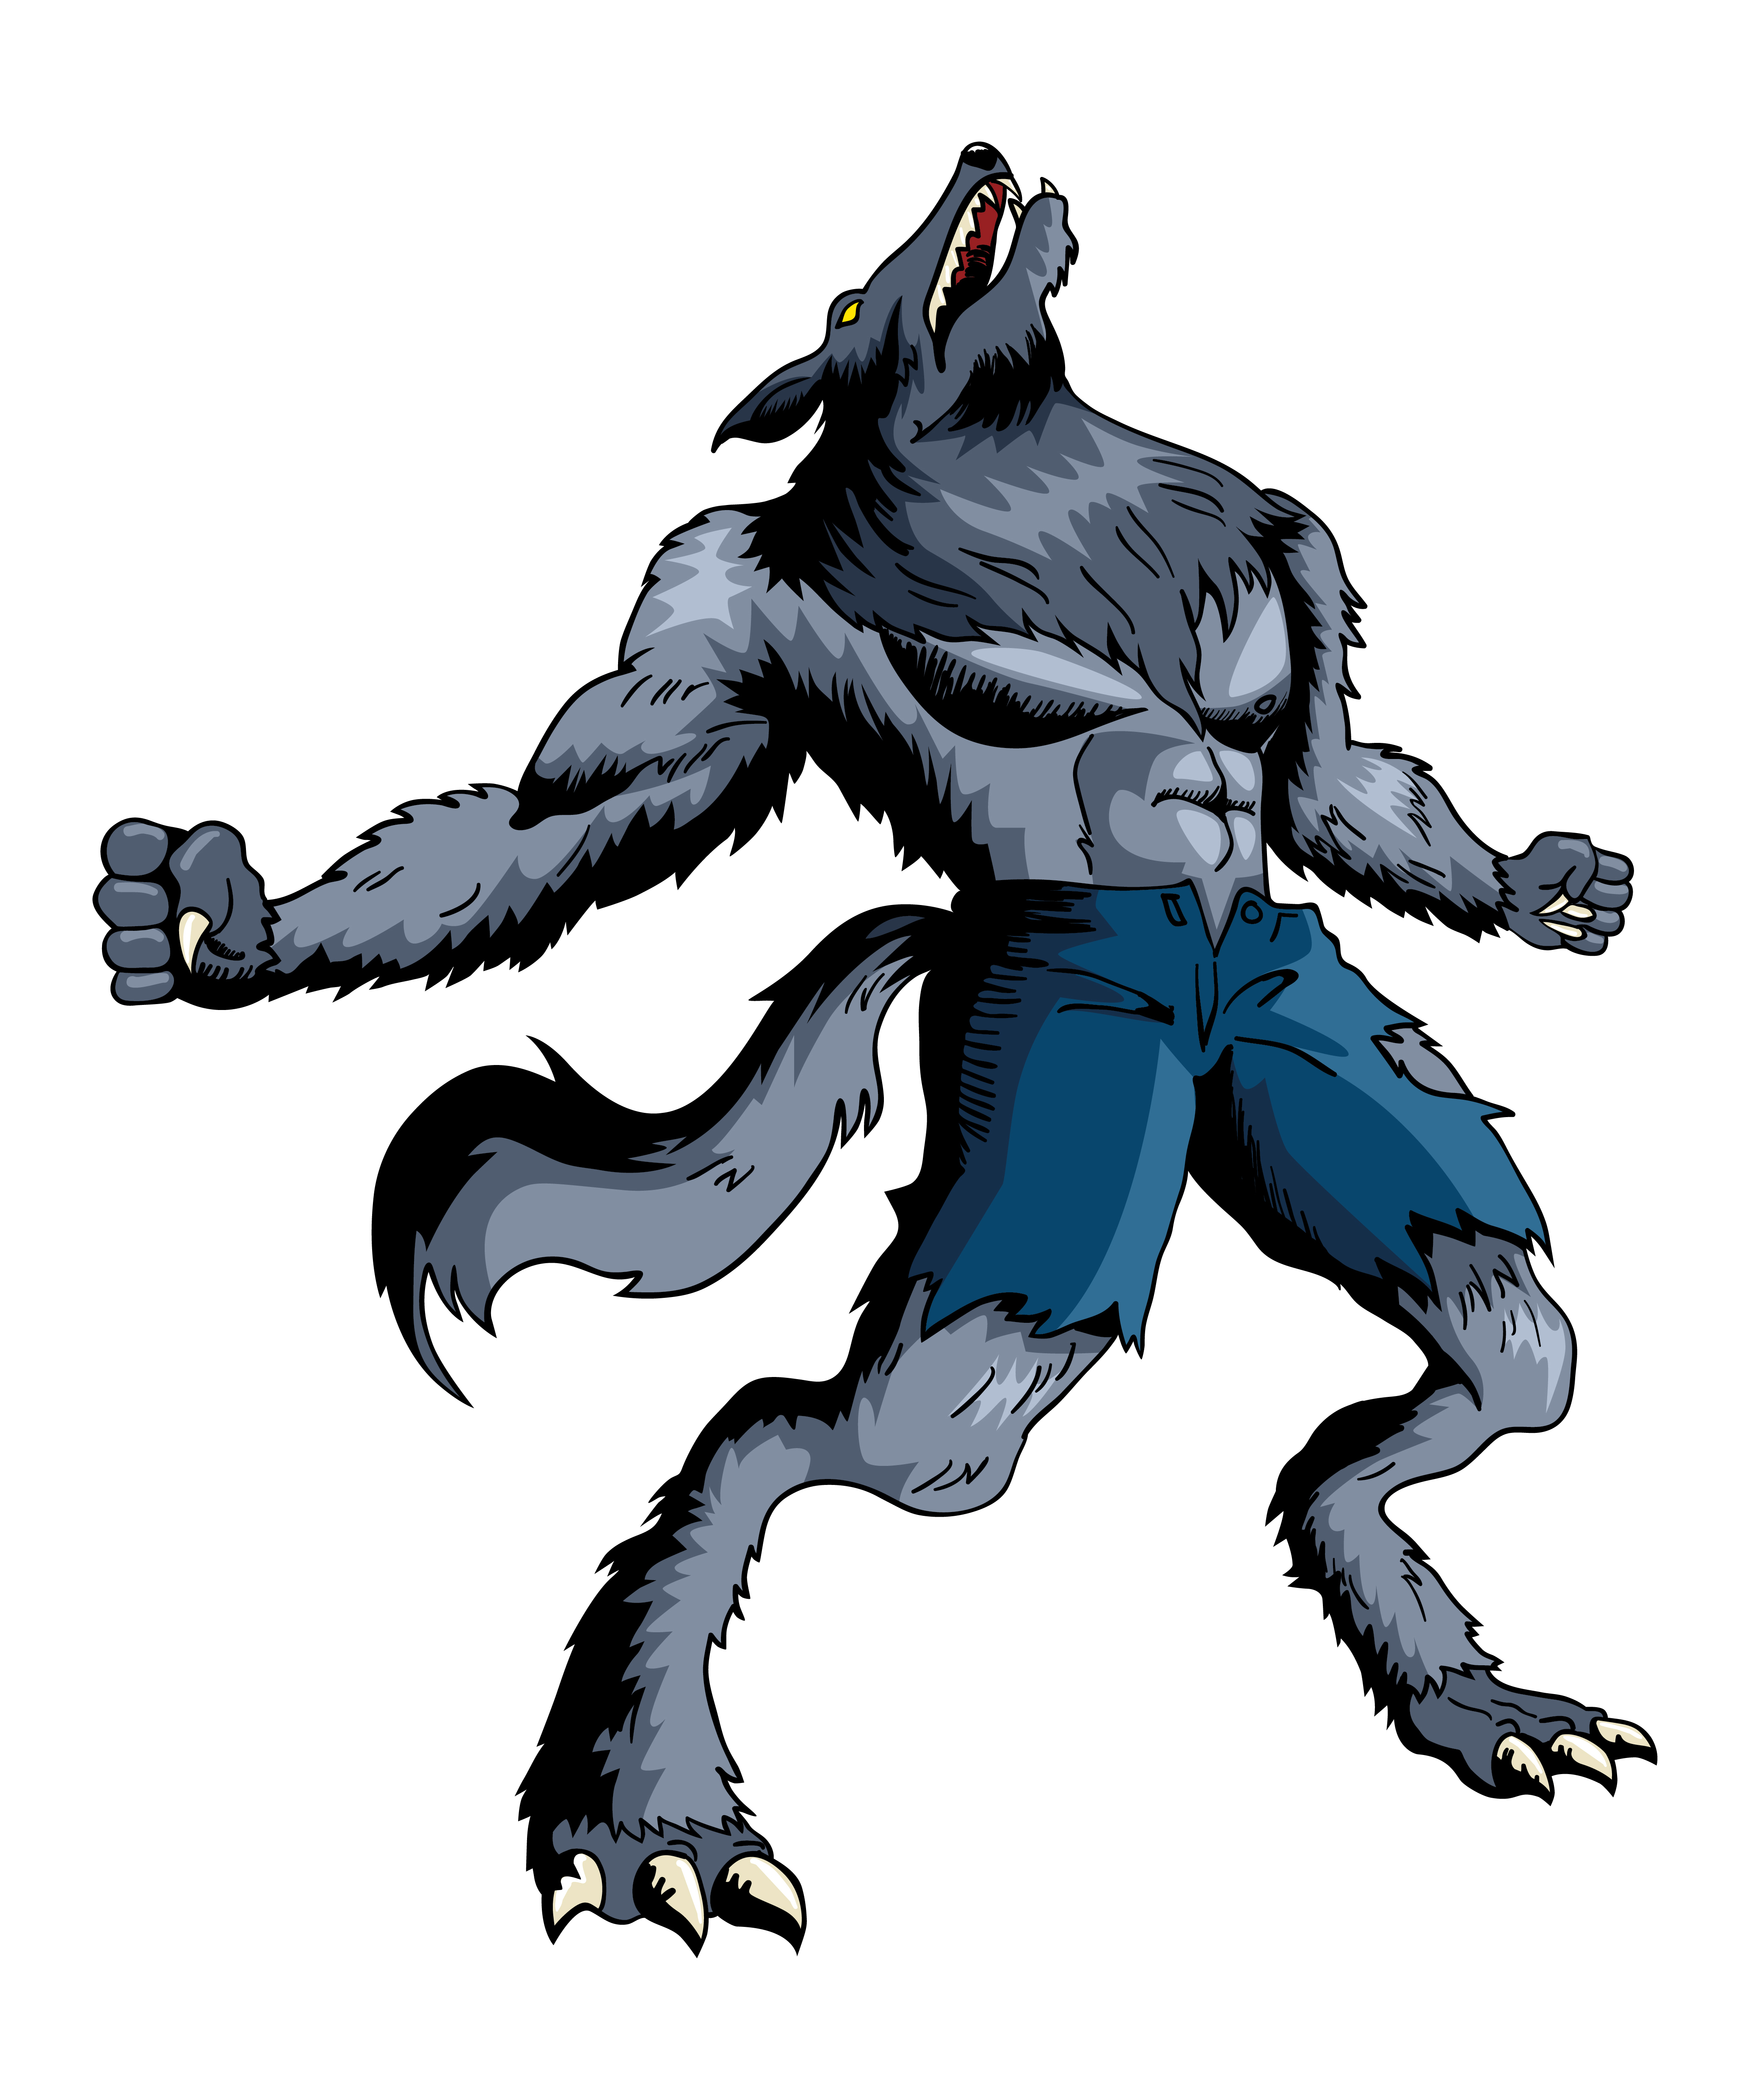 Cartoon illustration of a howling werewolf.